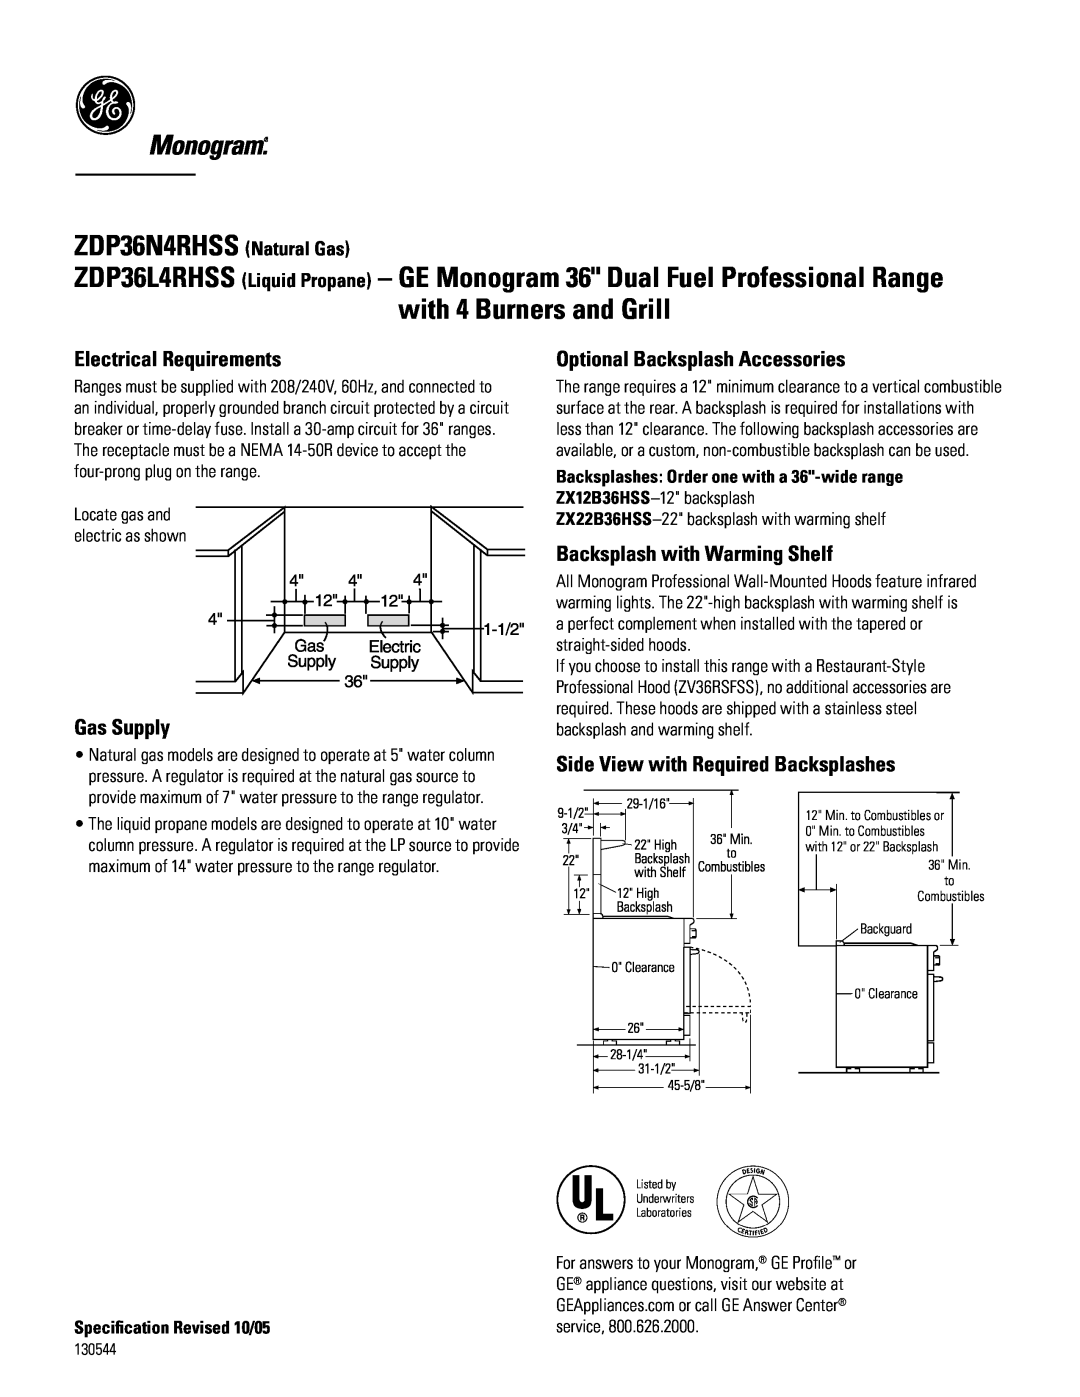 GE ZDP36N4RHSS4 Electrical Requirements, Gas Supply, Optional Backsplash Accessories, Backsplash with Warming Shelf 